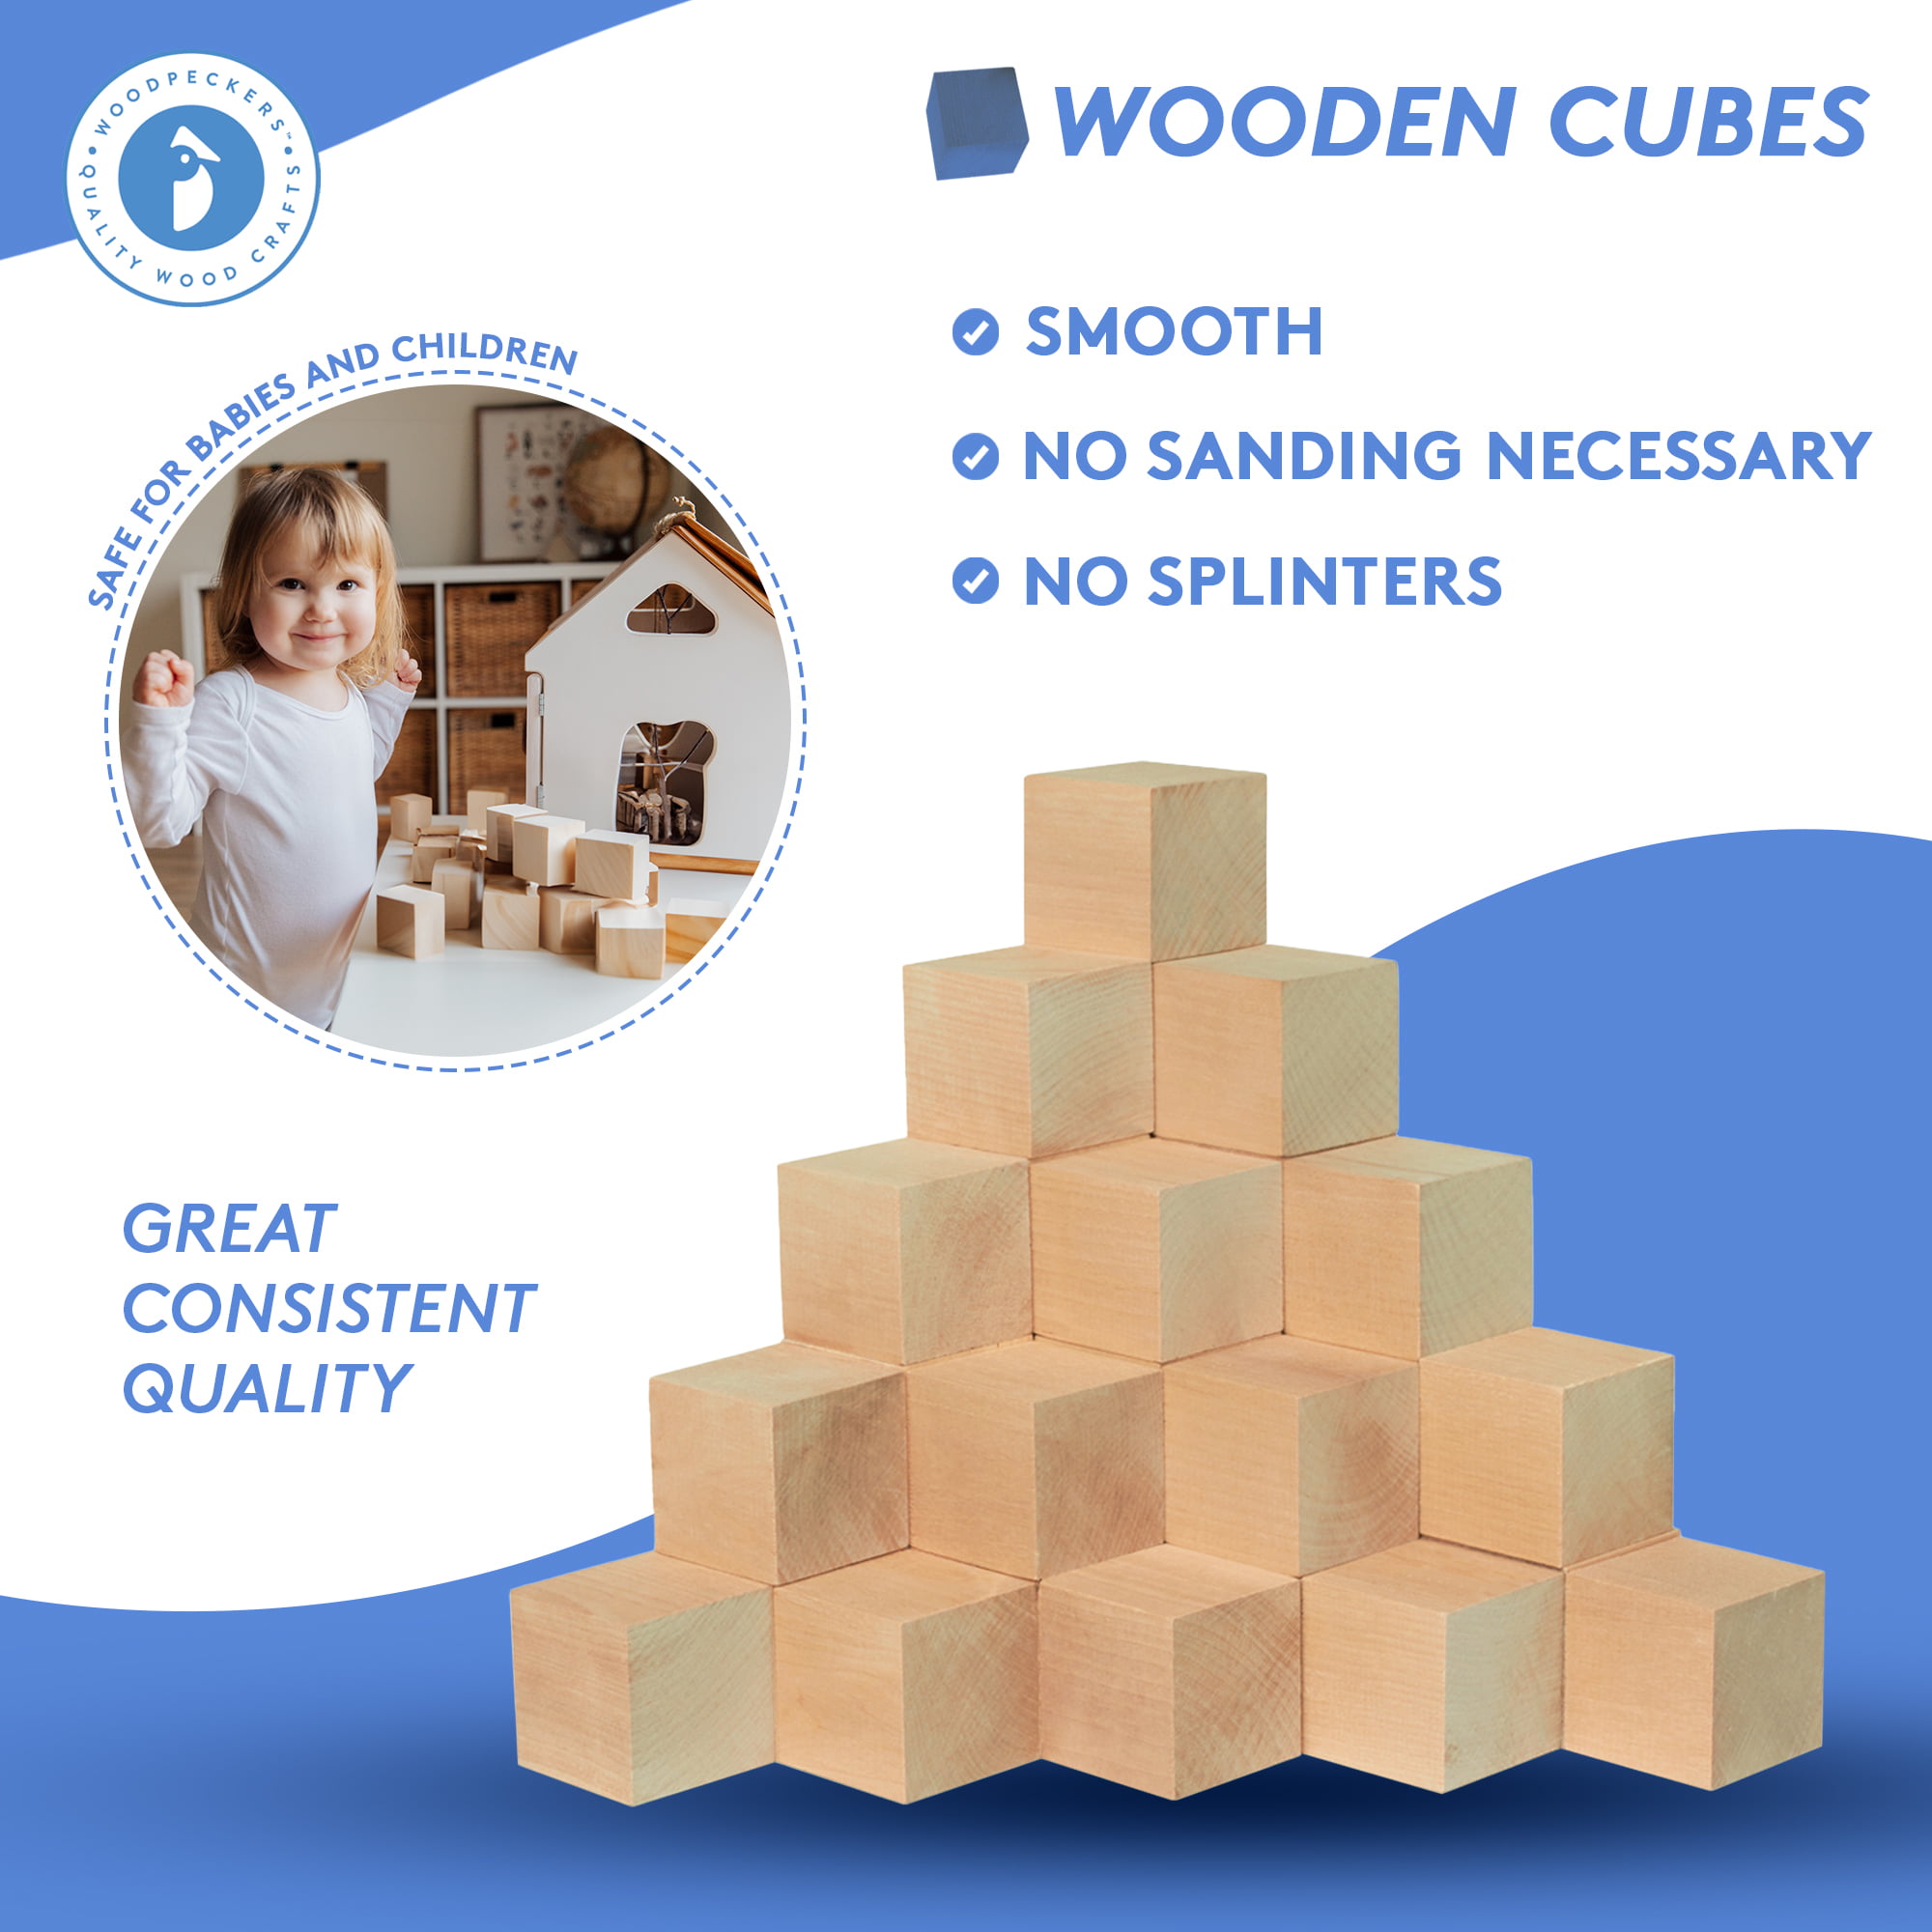 Woodcraft 4-Pack LOC-Blocks Interlocking Material Gripping Blocks